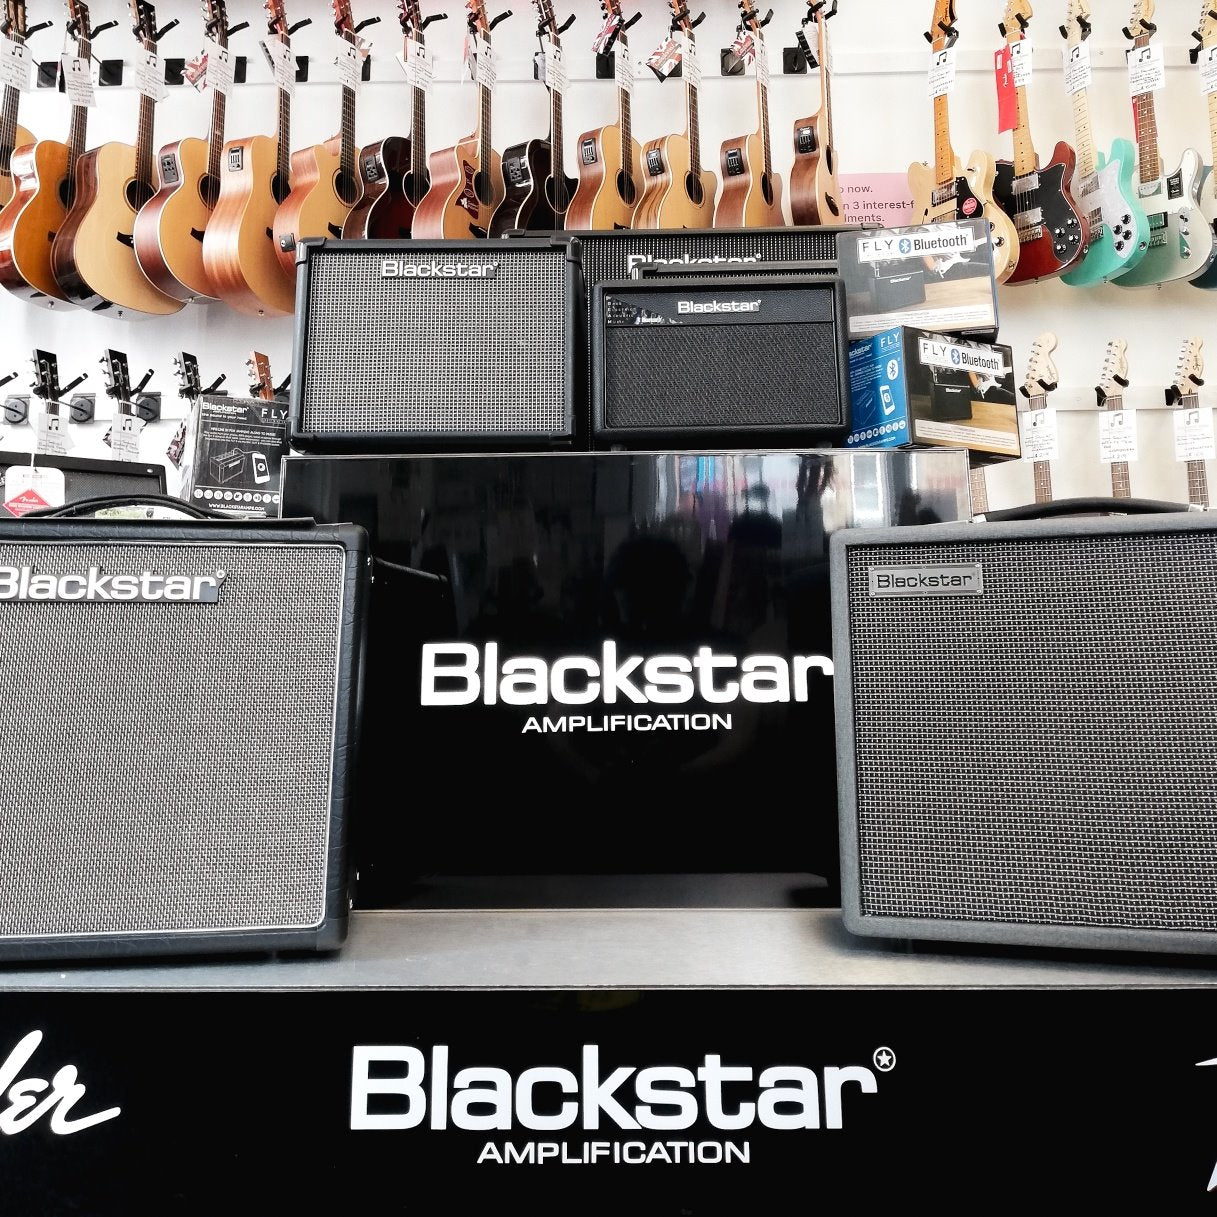 Now stocking Blackstar amplifiers!